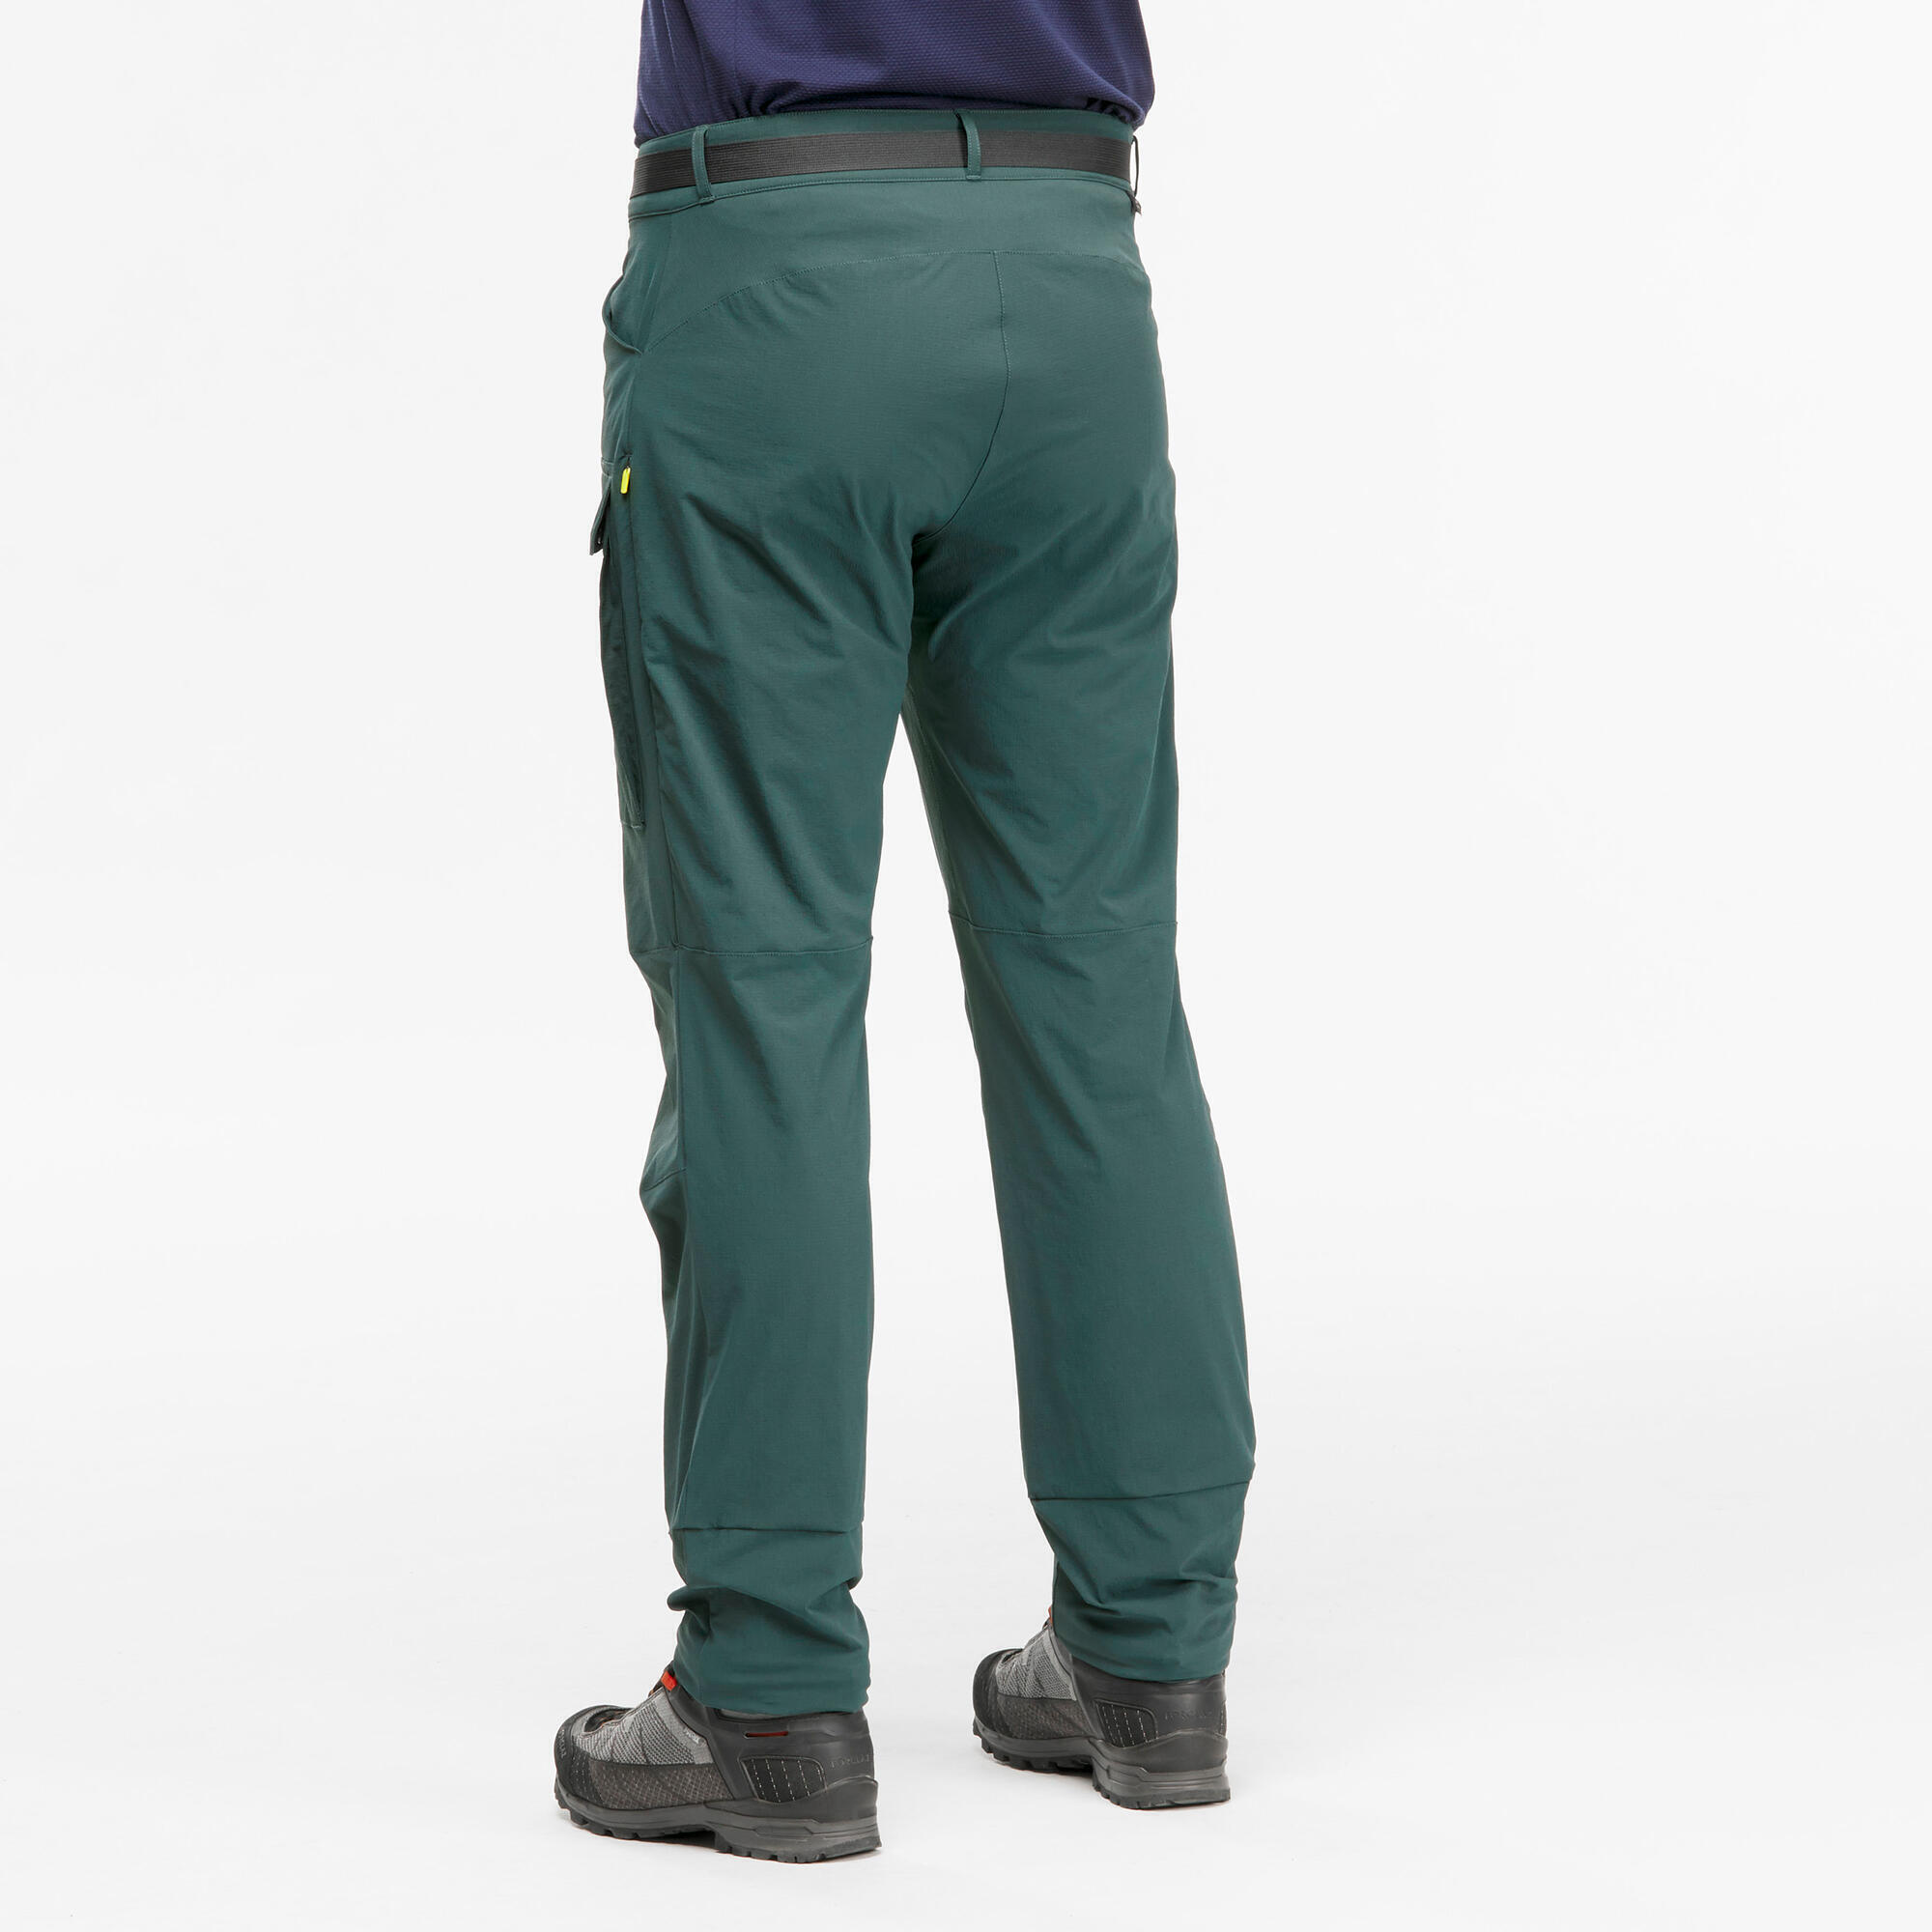 Men's Anti-mosquito Trousers - Tropic 900 - green 4/11